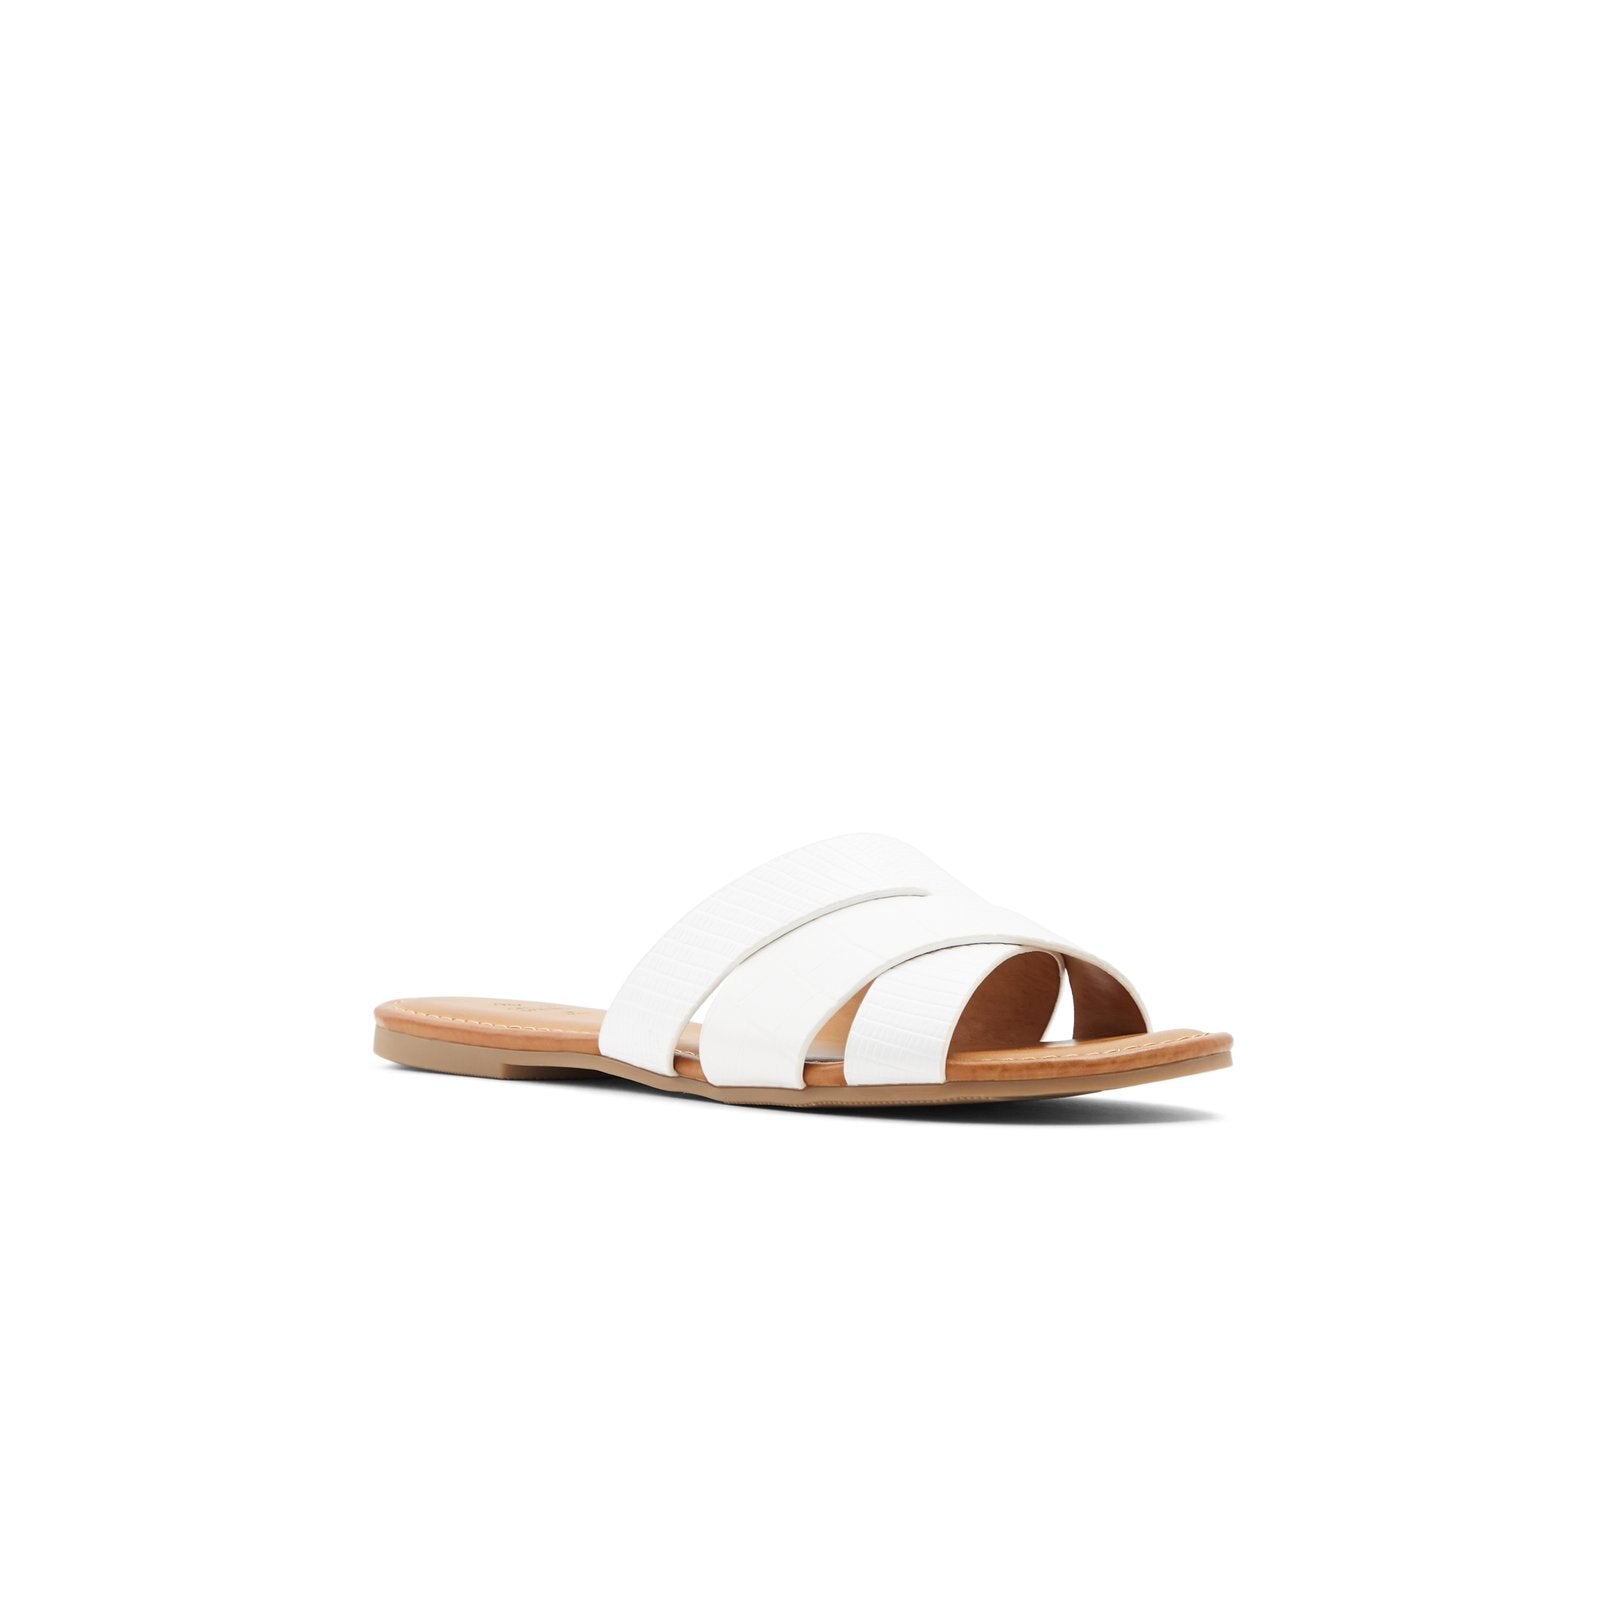 Billie / Flat Sandals Women Shoes - WHITE - CALL IT SPRING KSA